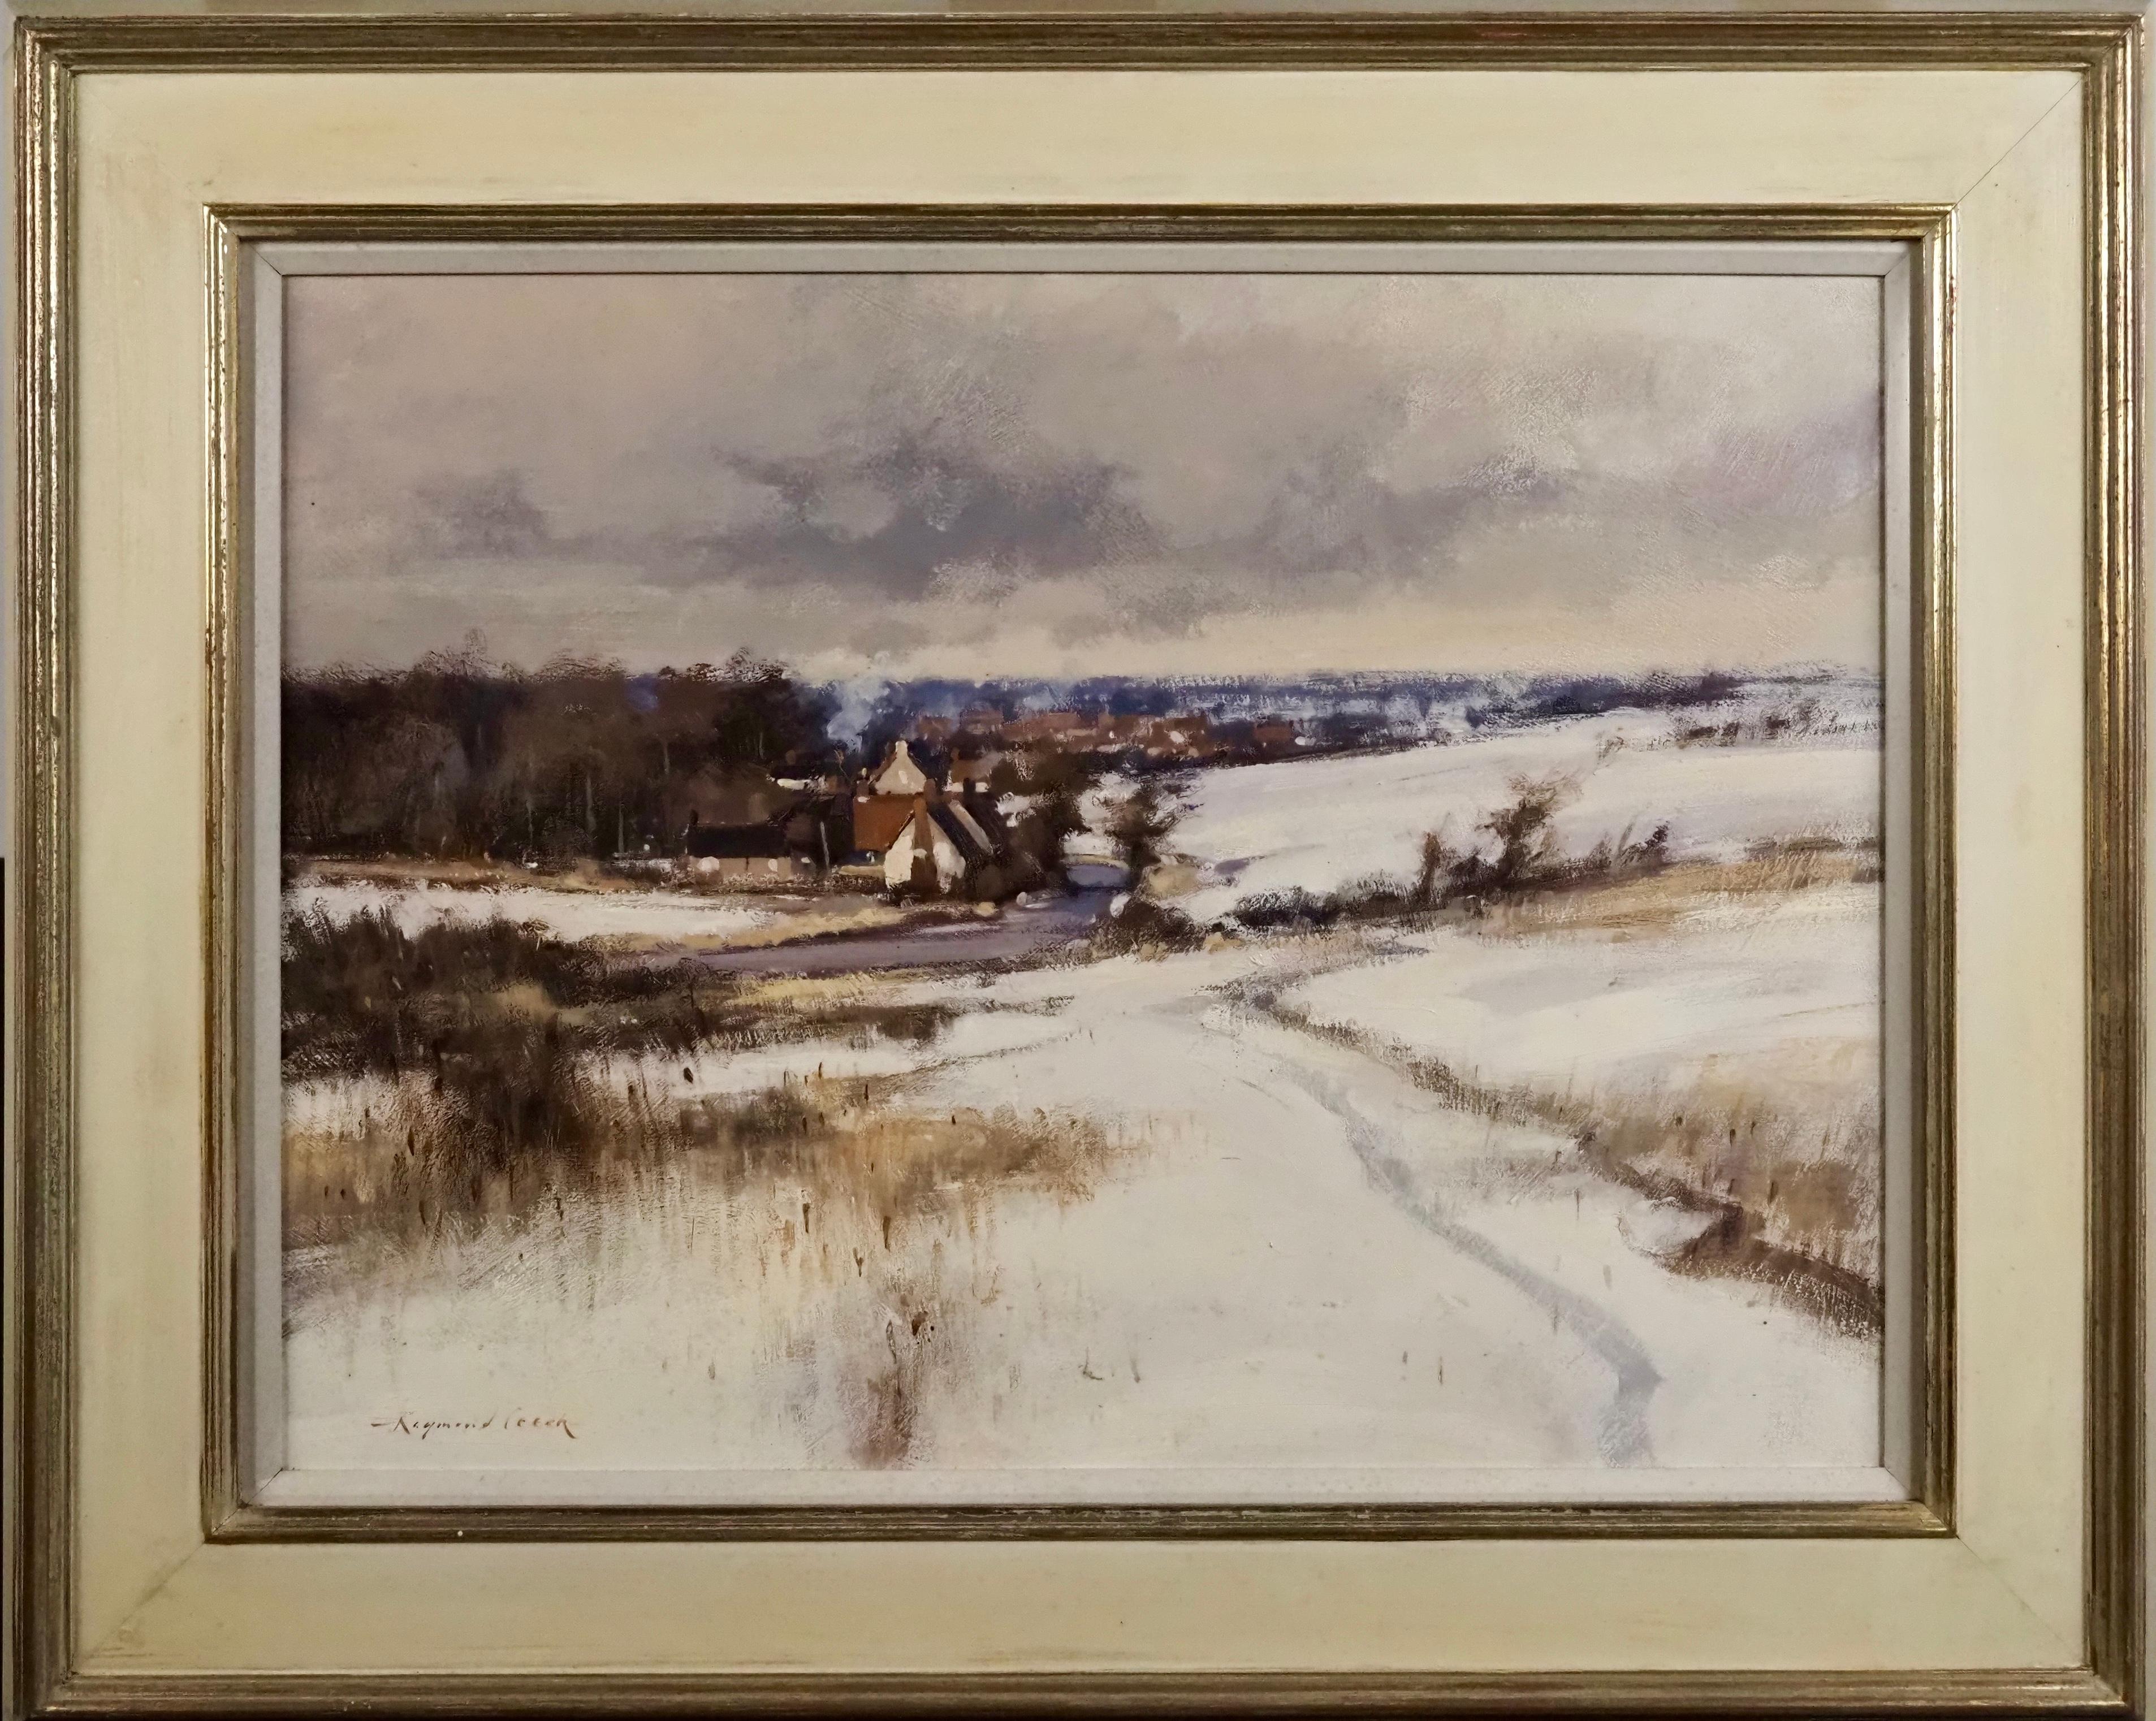 Raymond Leech Landscape Painting - A snowy winter landscape